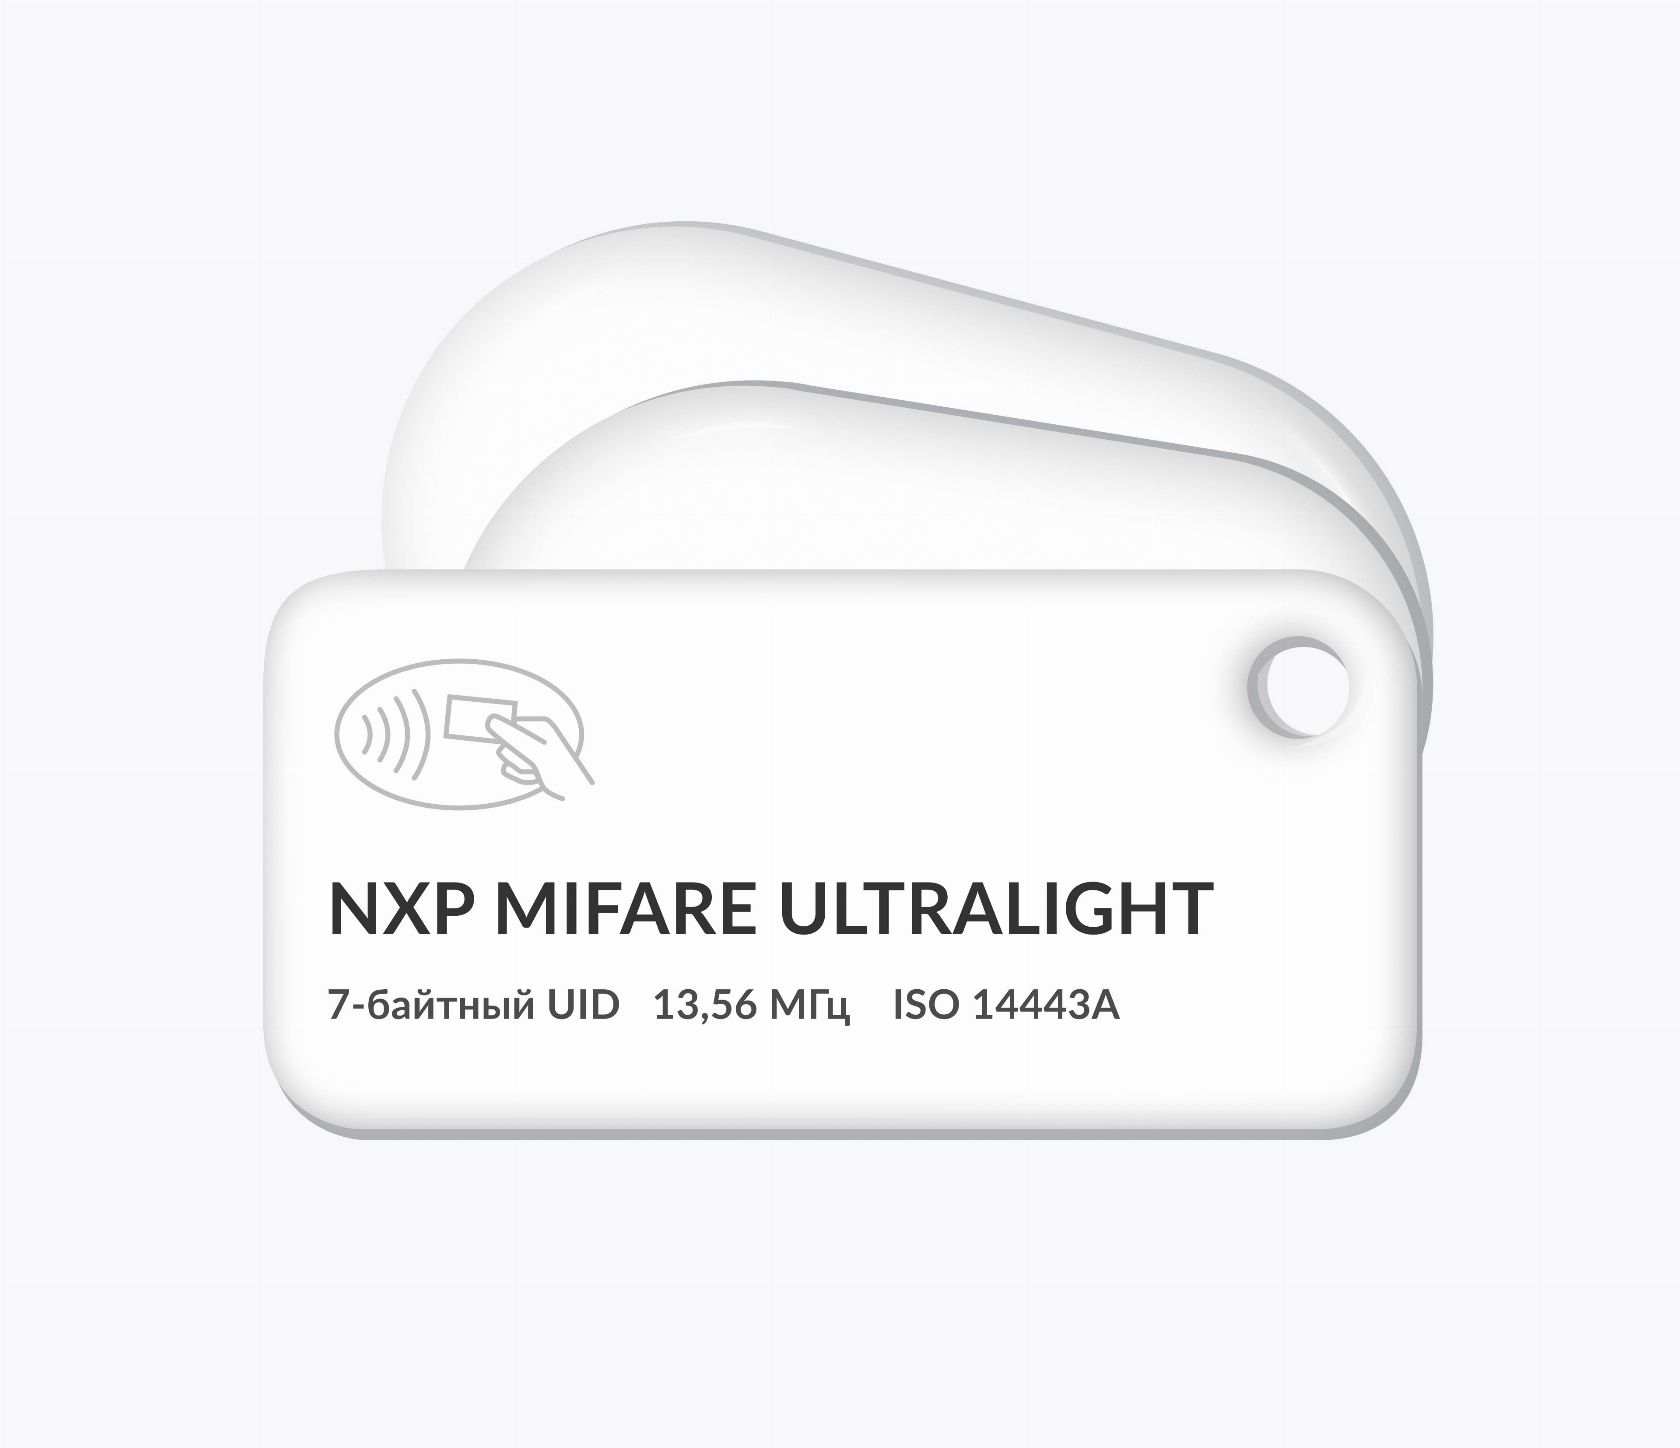 RFID-брелоки NEOKEY® с чипом NXP MIFARE Ultralight 7 byte UID и вашим логотипом RFID-брелоки NEOKEY® с чипом NXP MIFARE Ultralight 7 byte UID и вашим логотипом